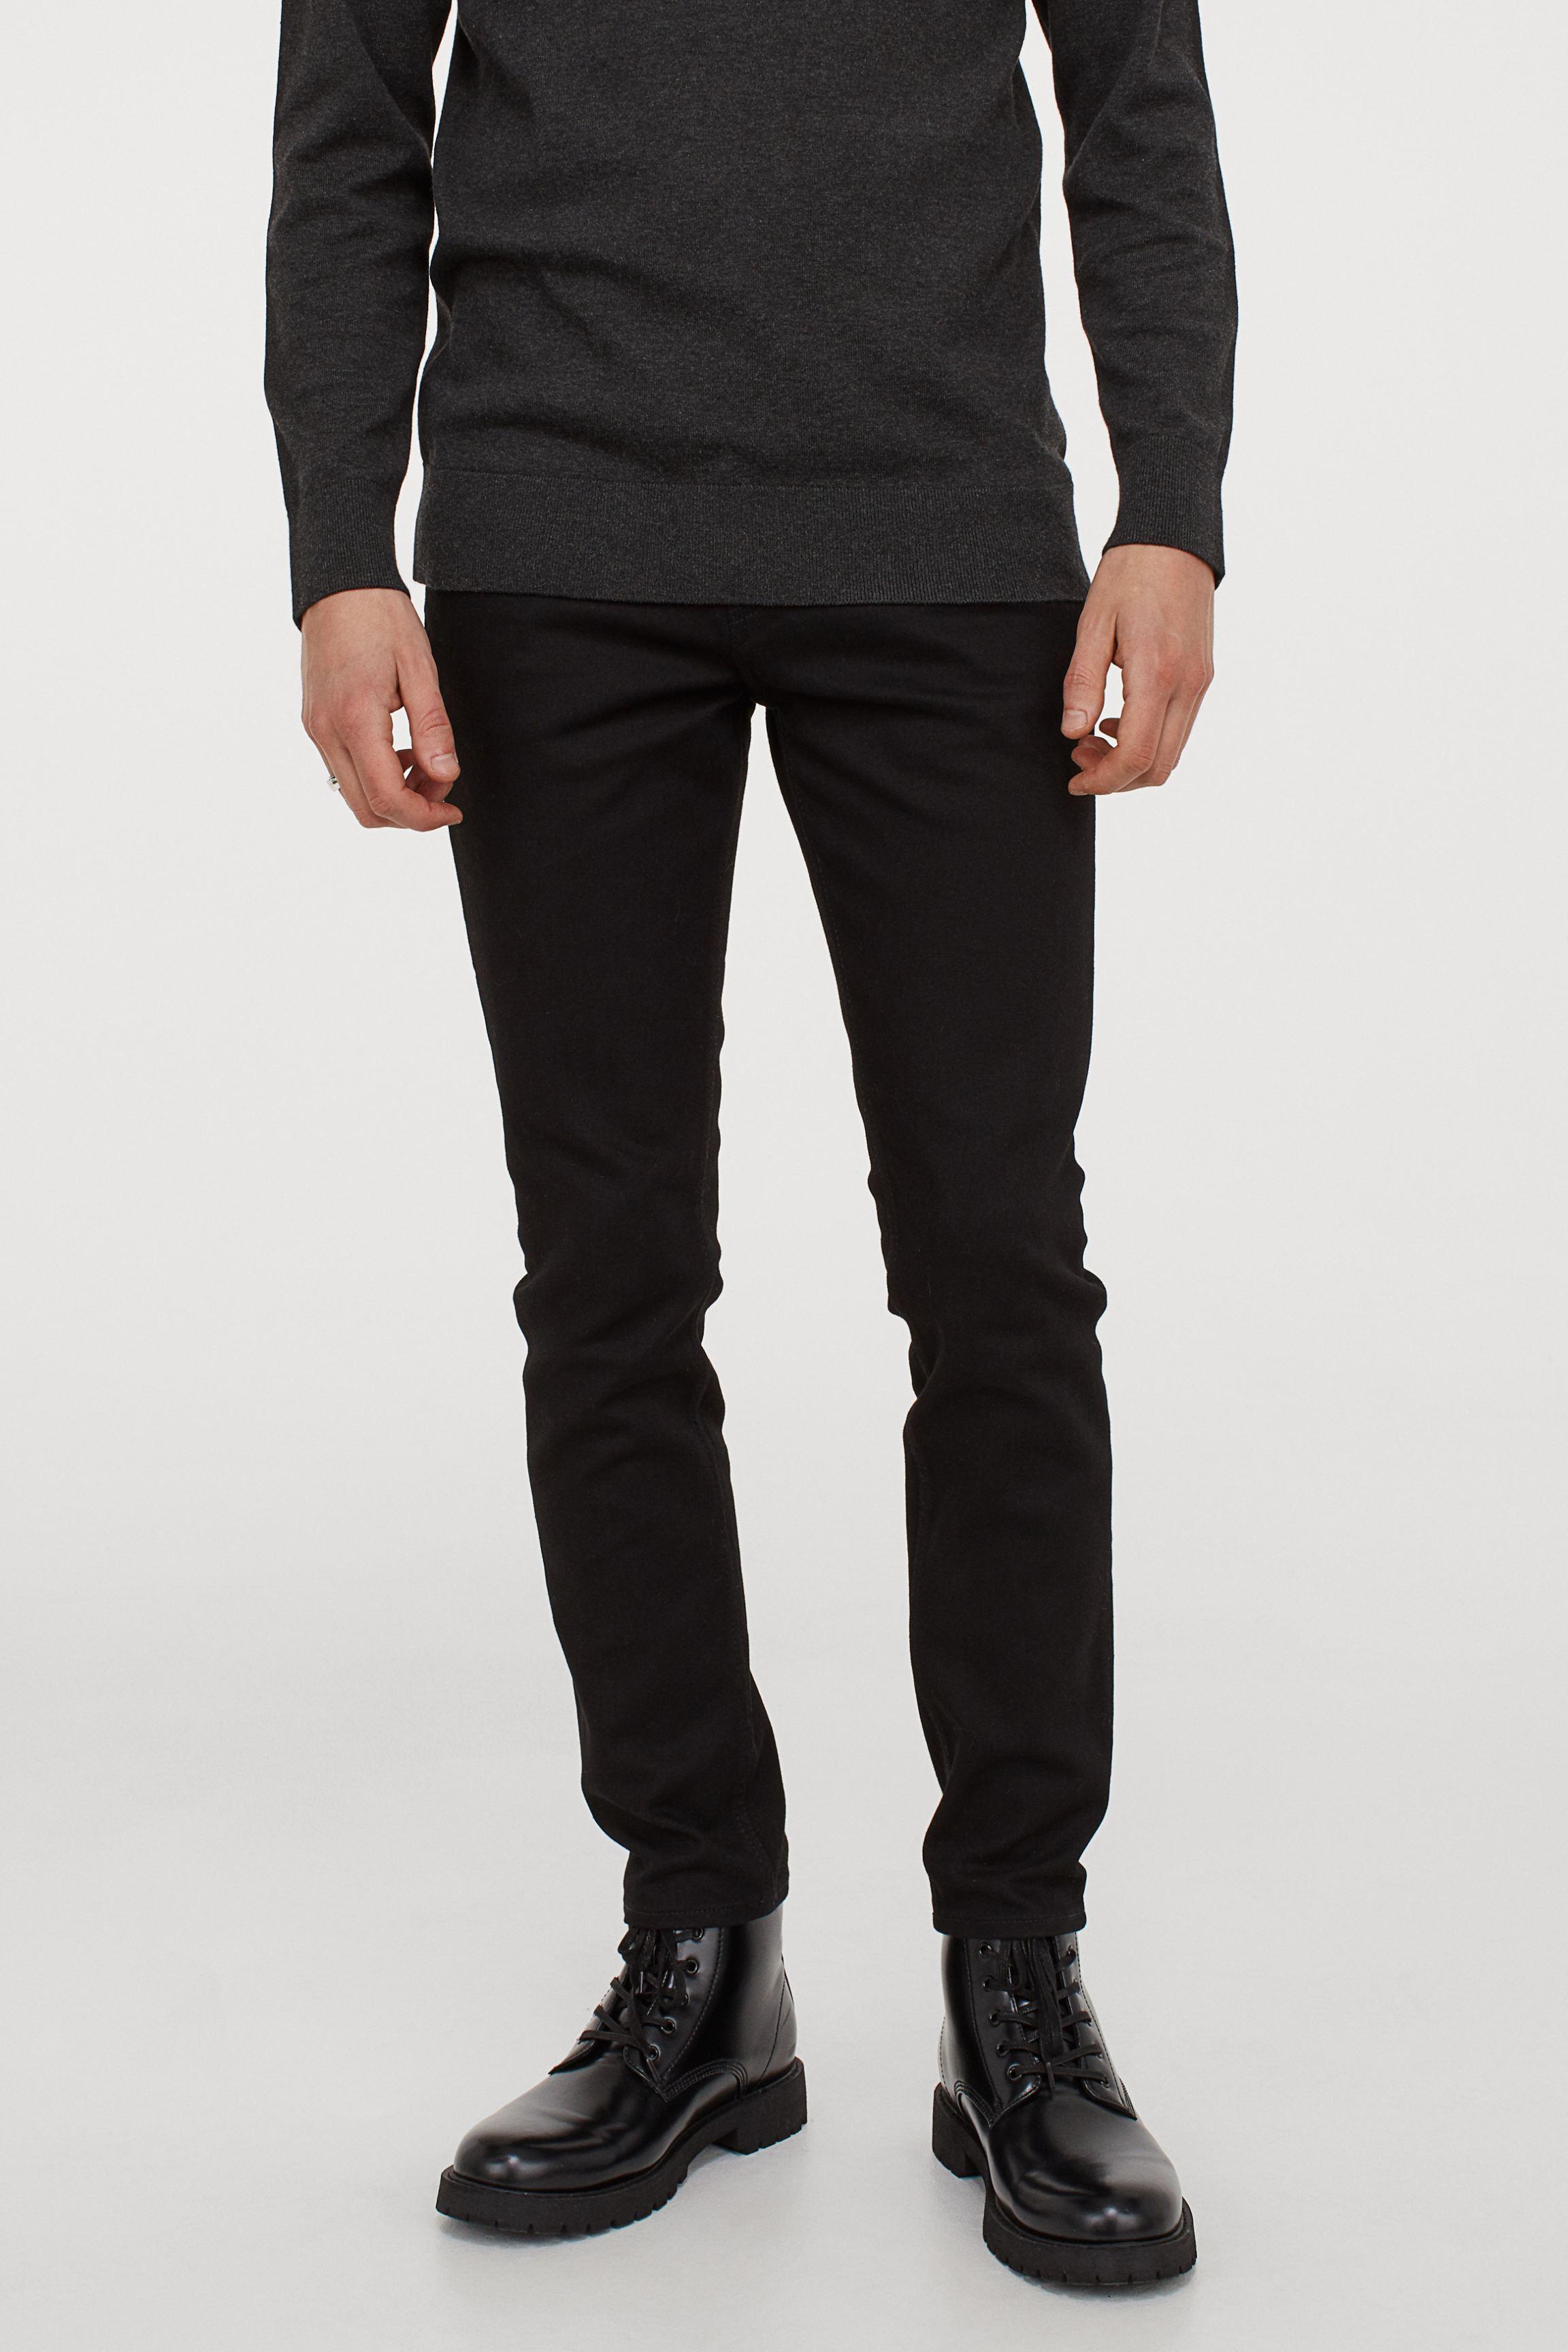 H&M Denim Skinny Jeans in Black for Men - Lyst